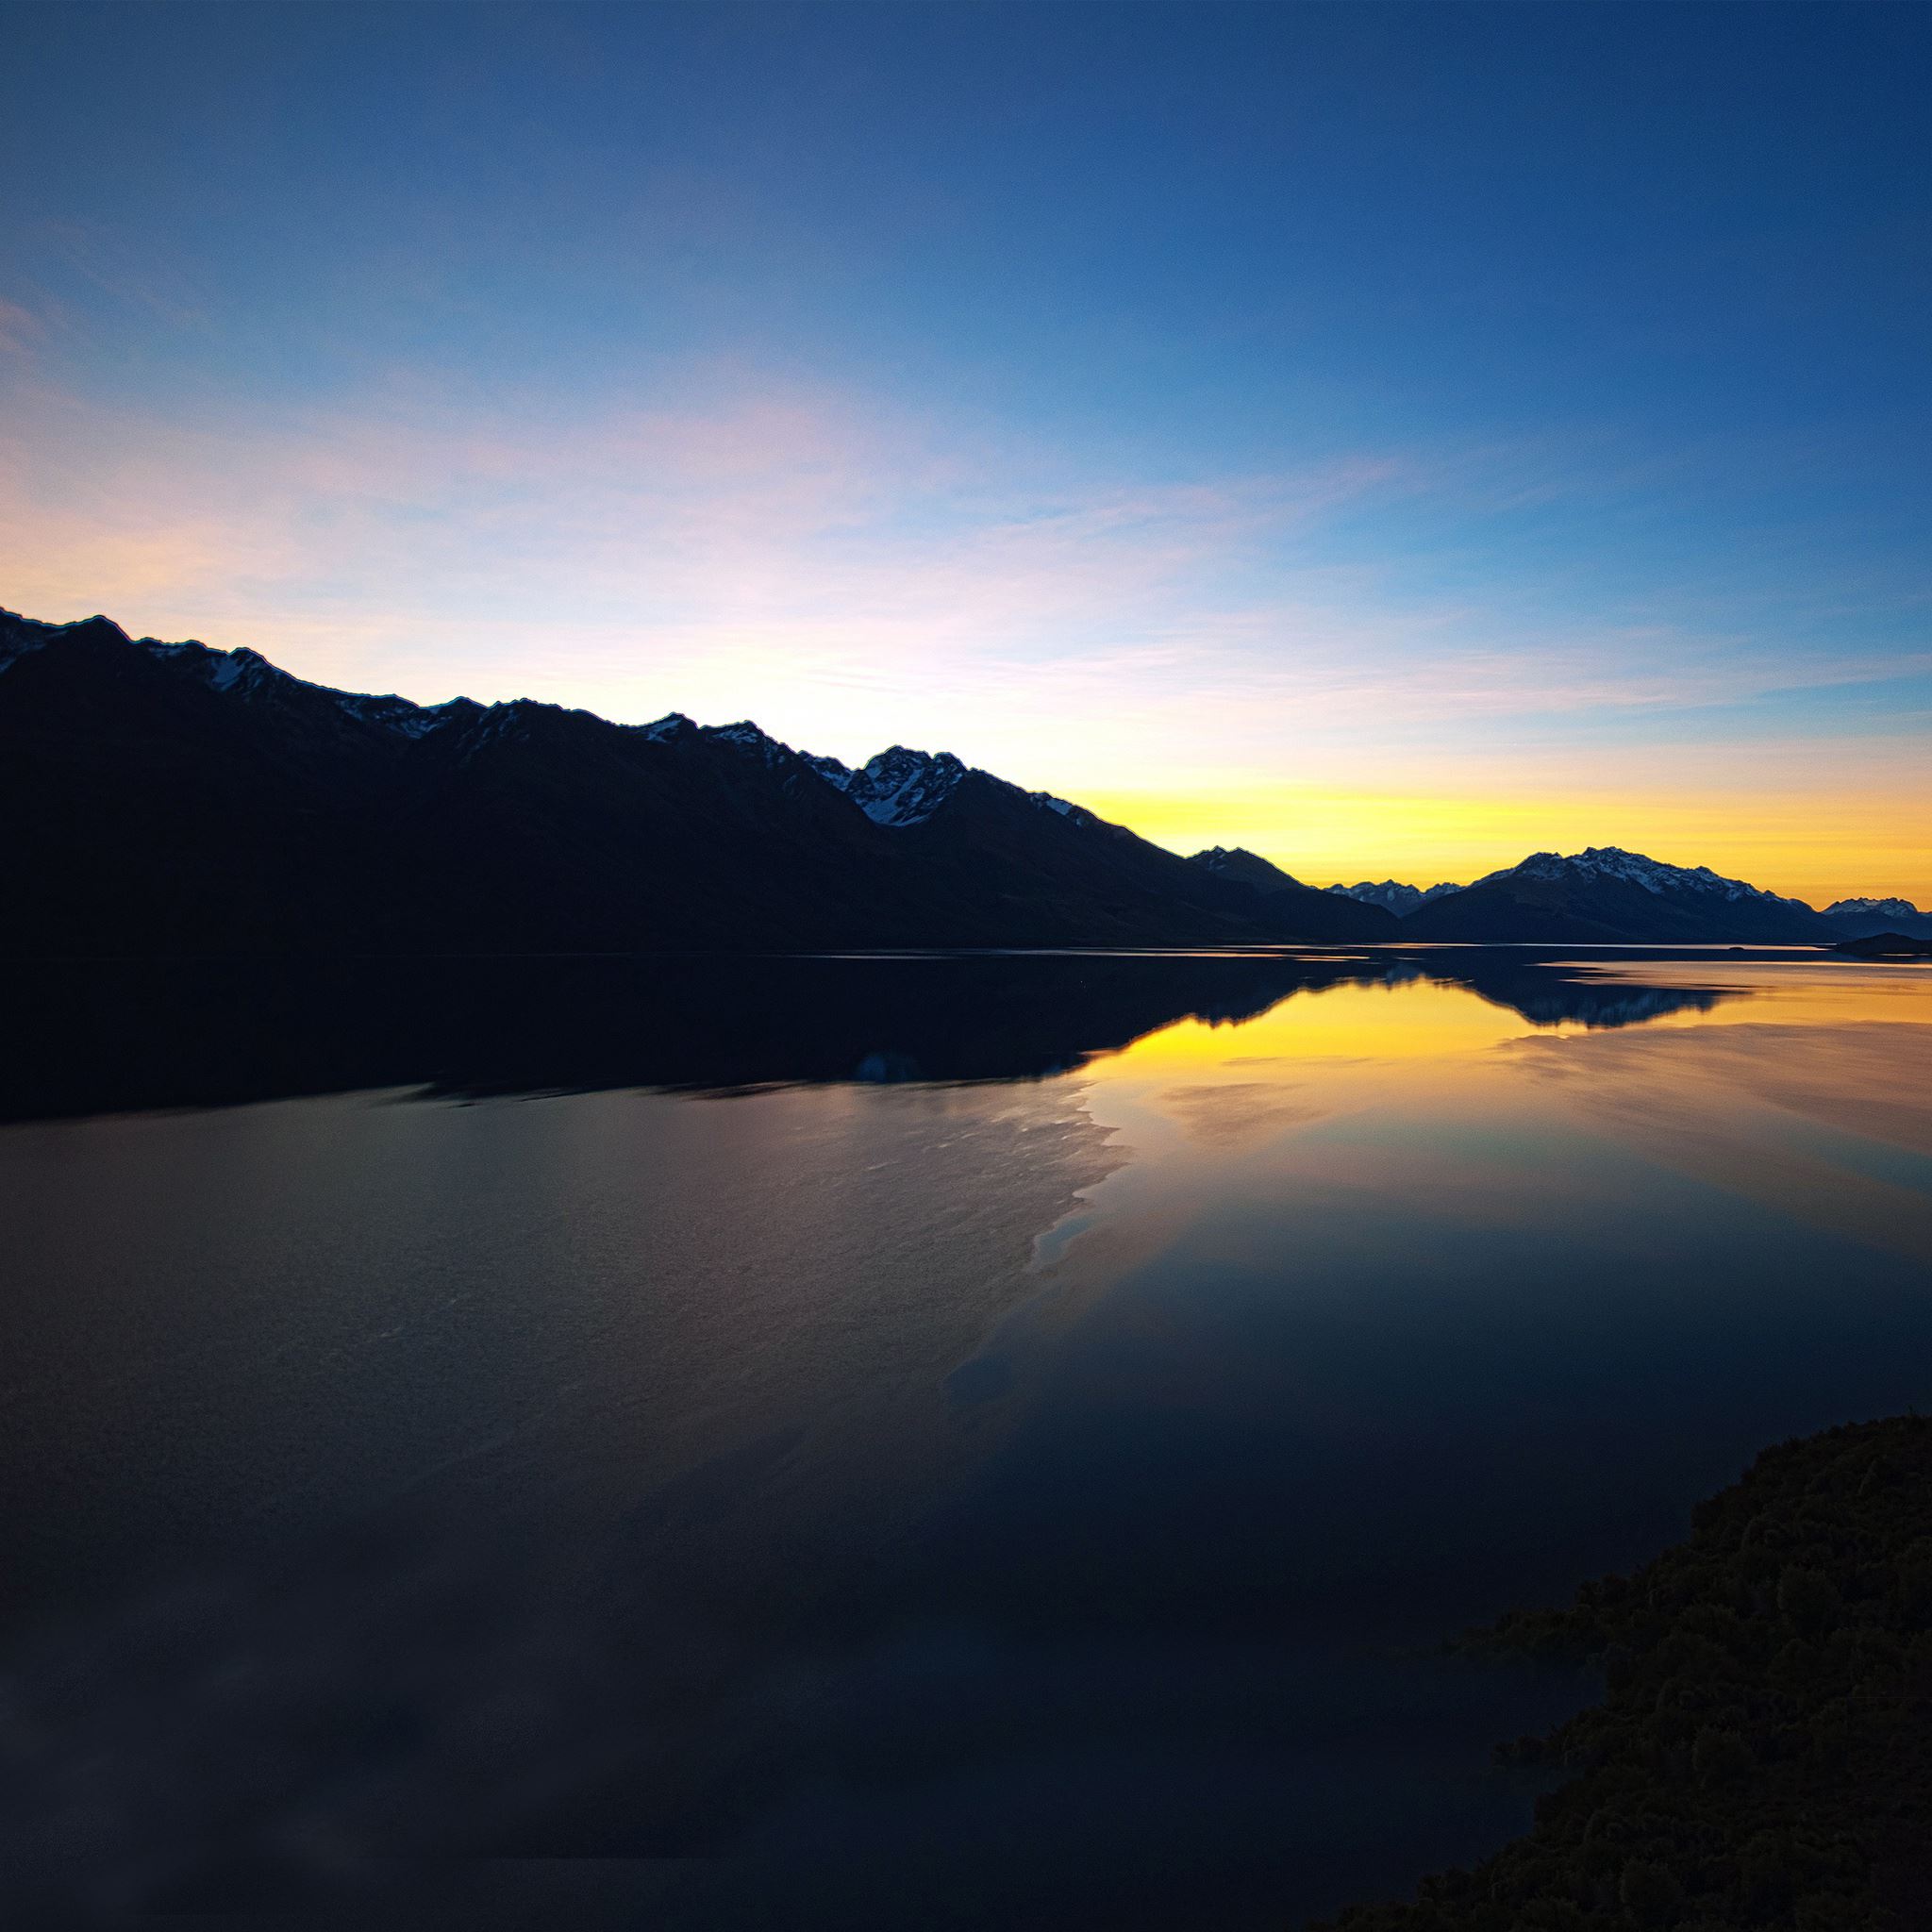 Sunset over mountain lake iPad Air wallpaper 